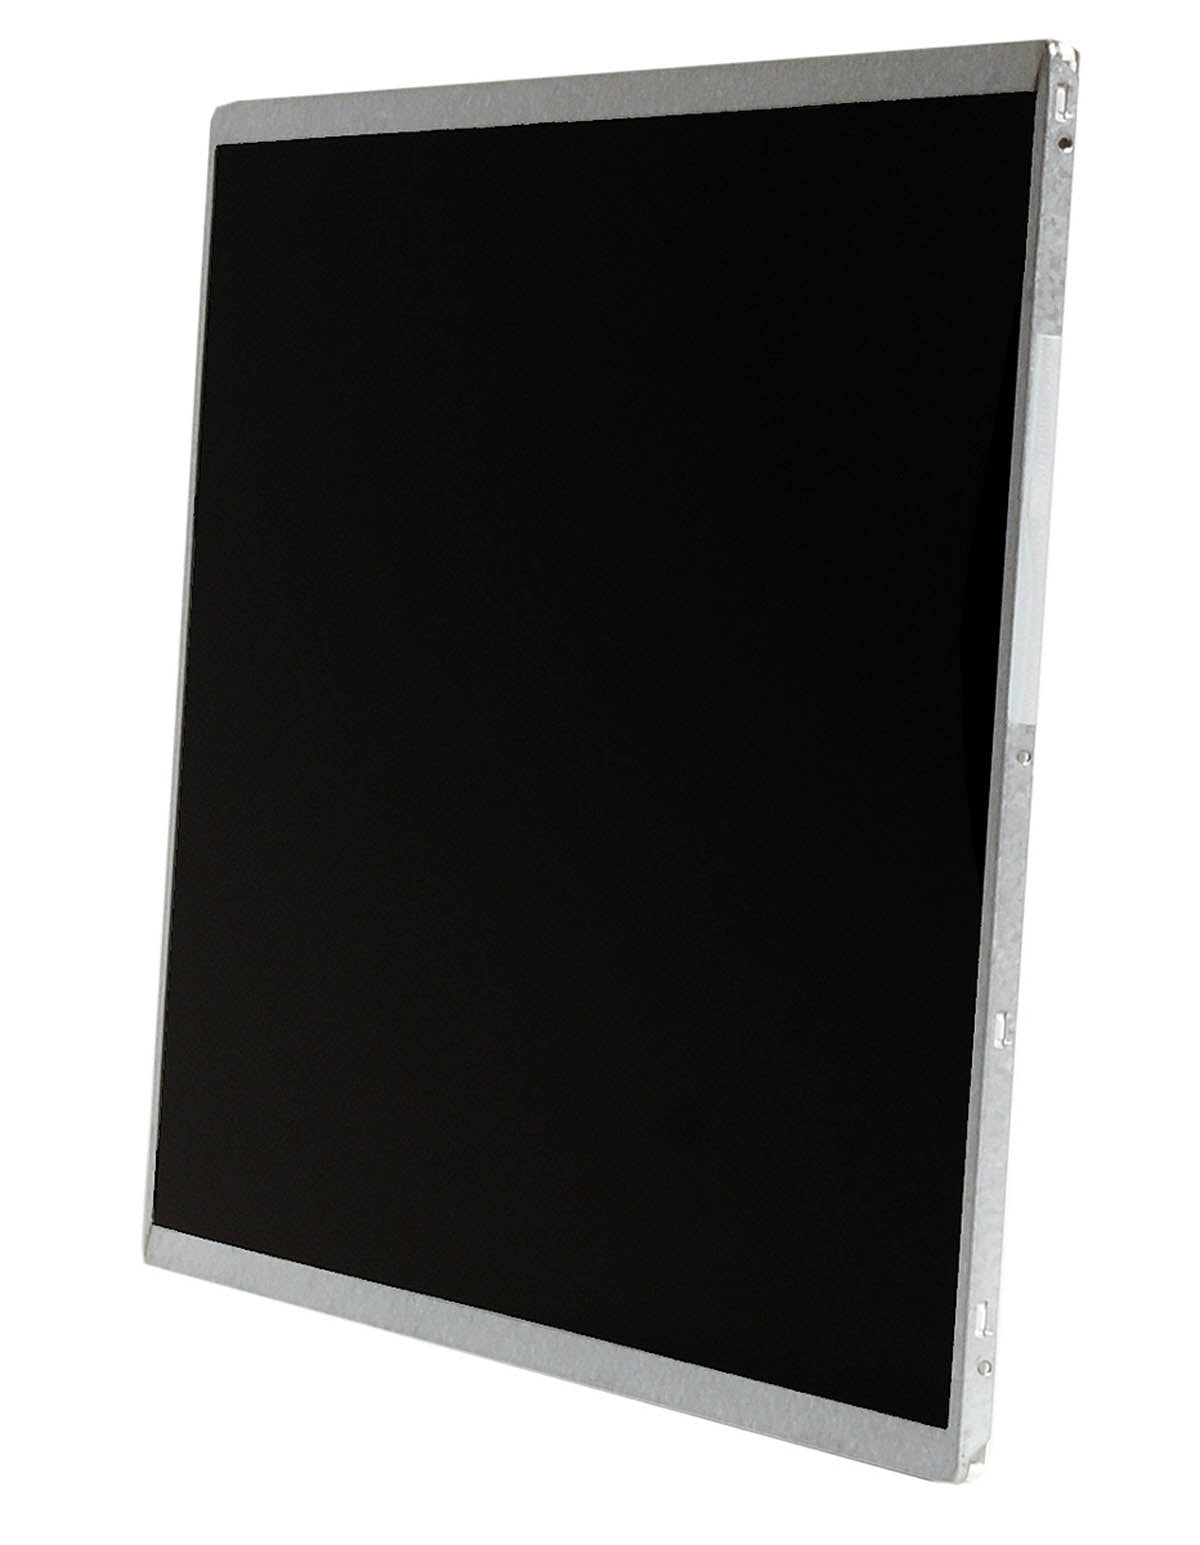 IBM-Lenovo ESSENTIAL G400 G405 G410 Series 14" LED LCD Screen Display Panel HD 